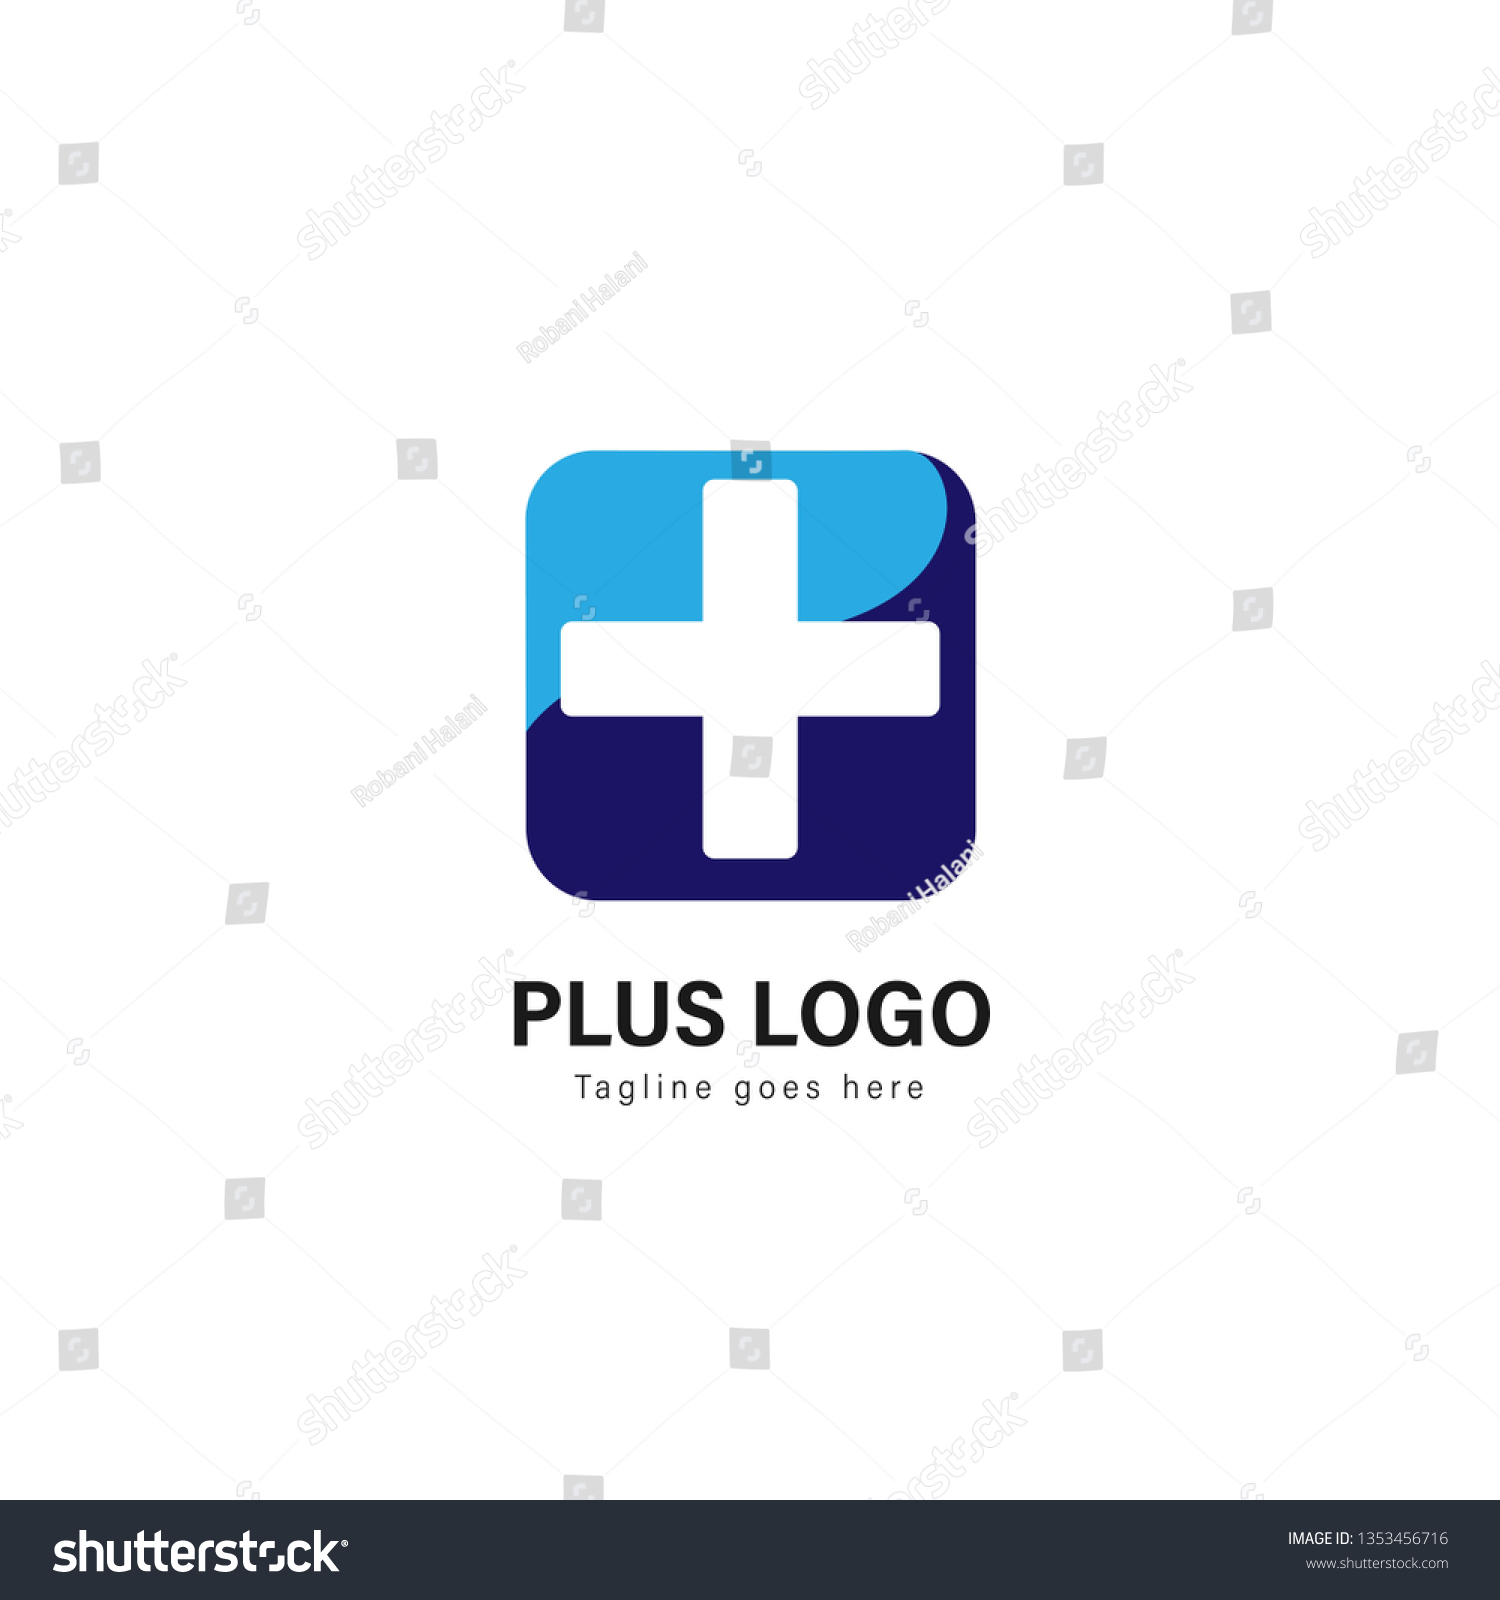 Medic logo template design. Medic logo with modern frame isolated on white background #1353456716